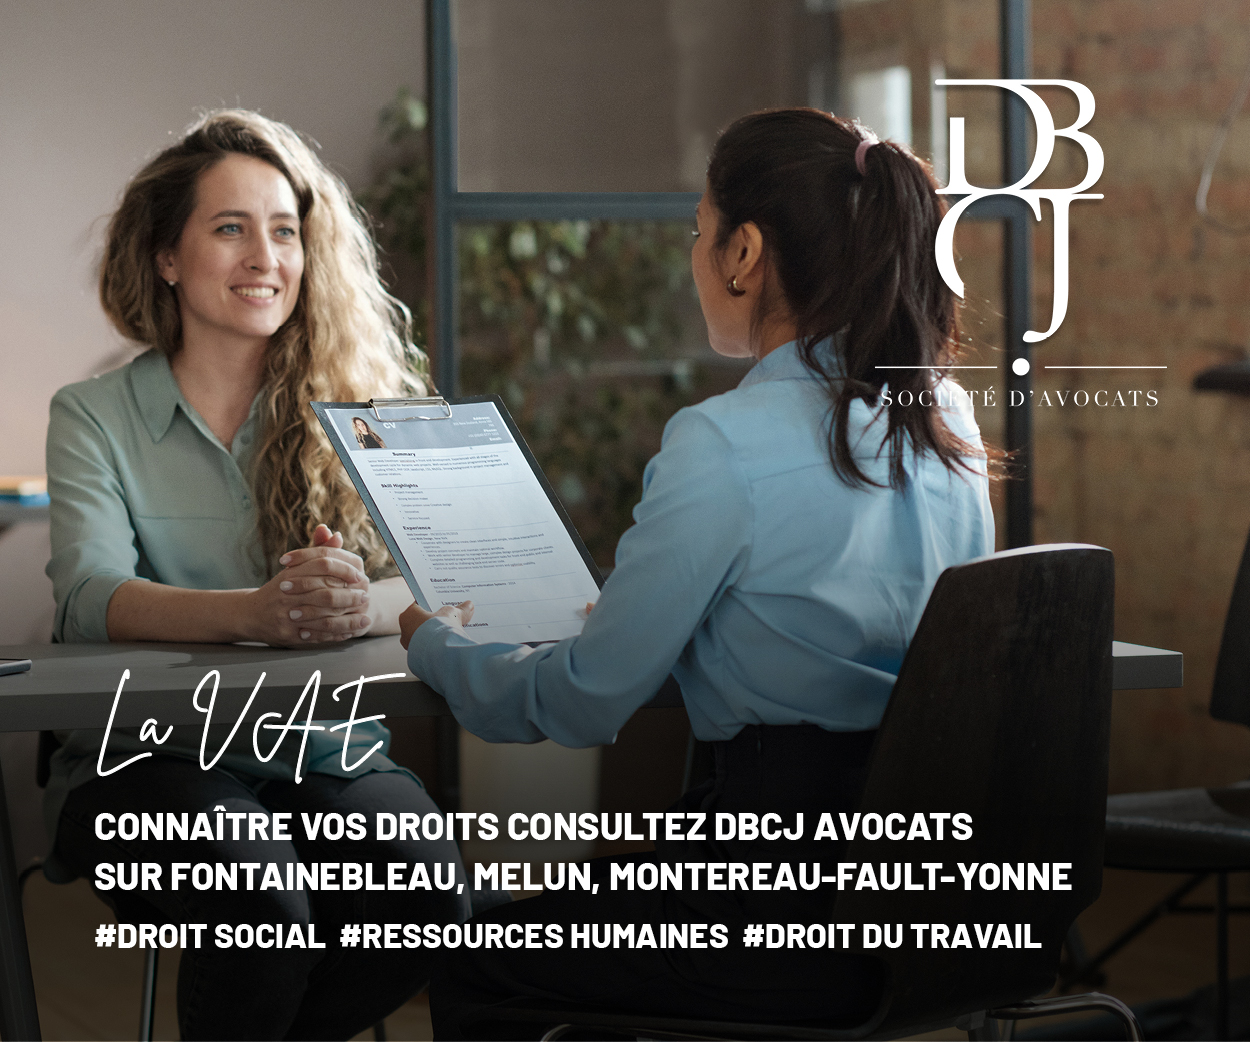 DBCJ Avocats visuel des médias sociaux